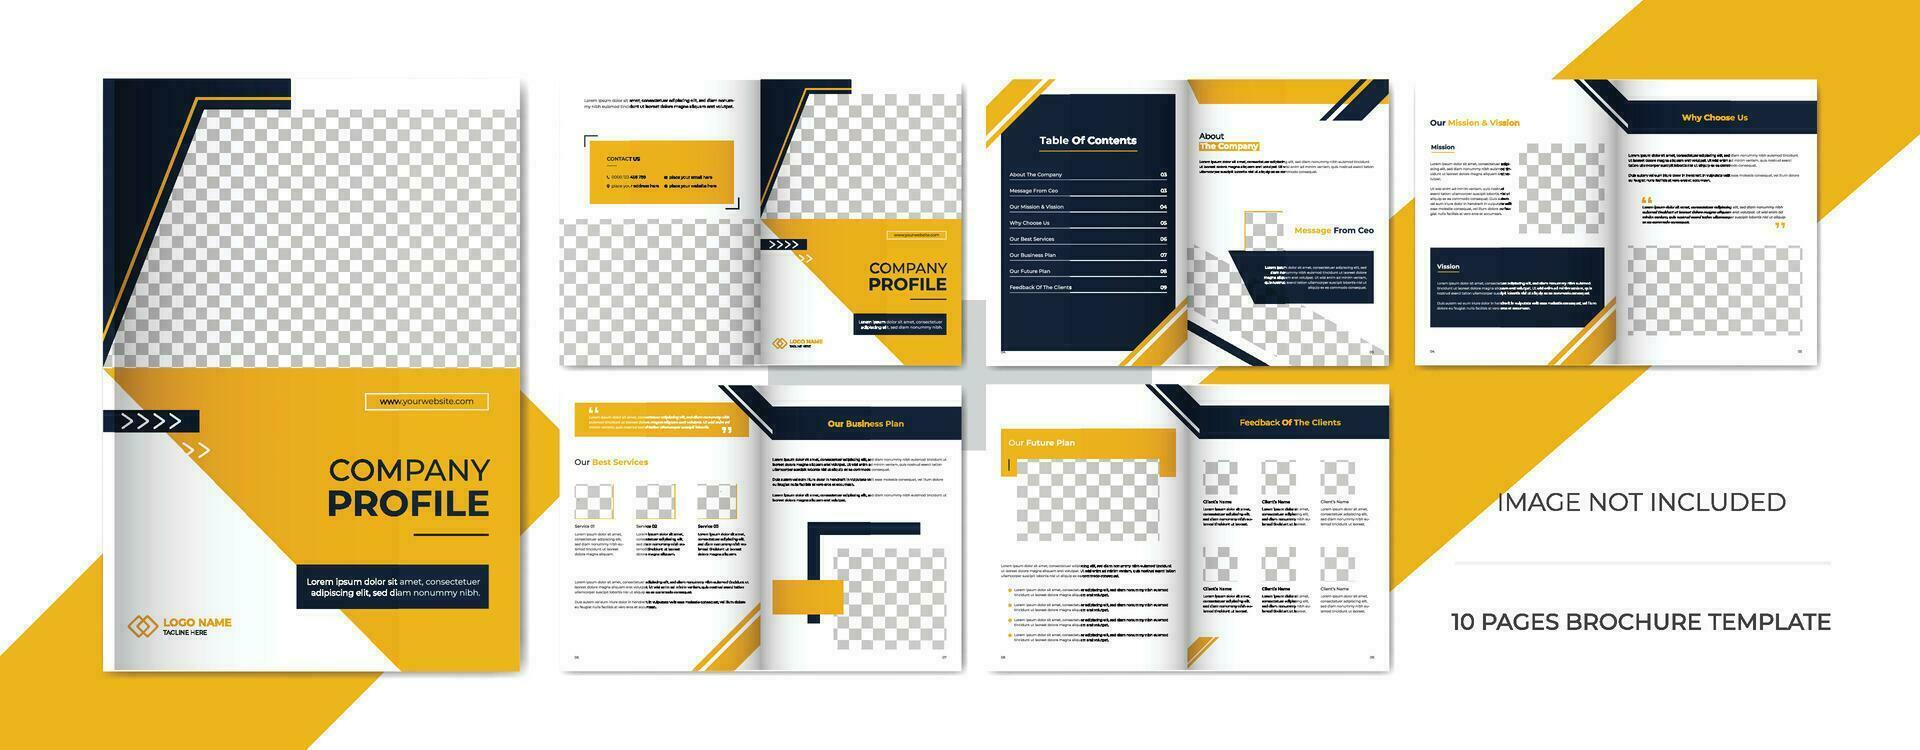 corporativo empresa perfil plantilla, negocio folleto diseño, anual reporte o negocio propuesta vector modelo